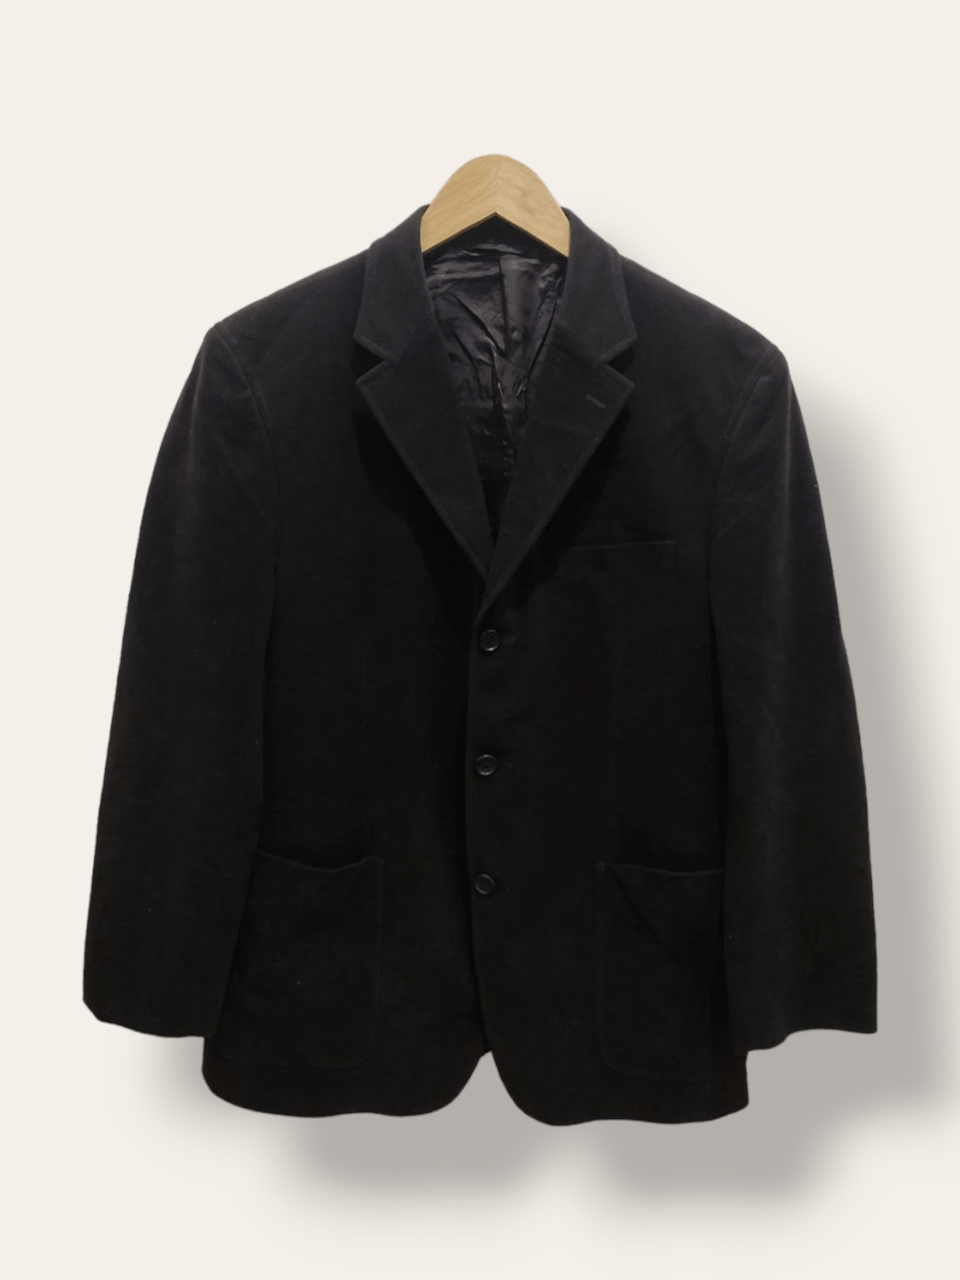 D'Urban Taylor Casual Japanese Designer Blazer Suit Jacket - 1